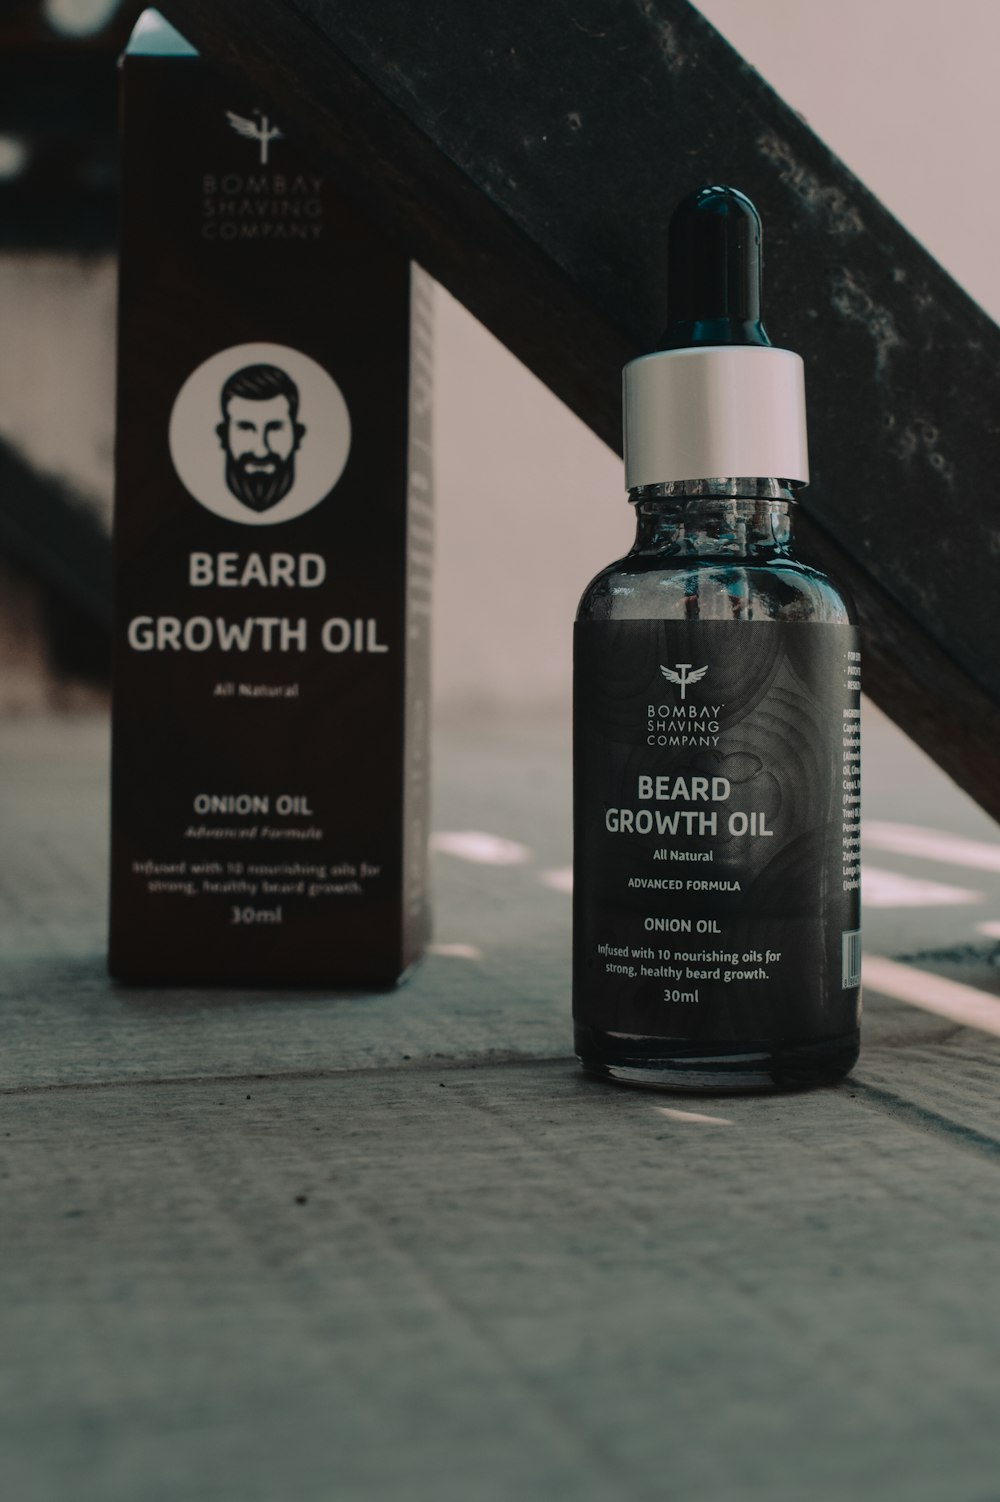 a bottle of beard growth oil next to a box of beard growth oil